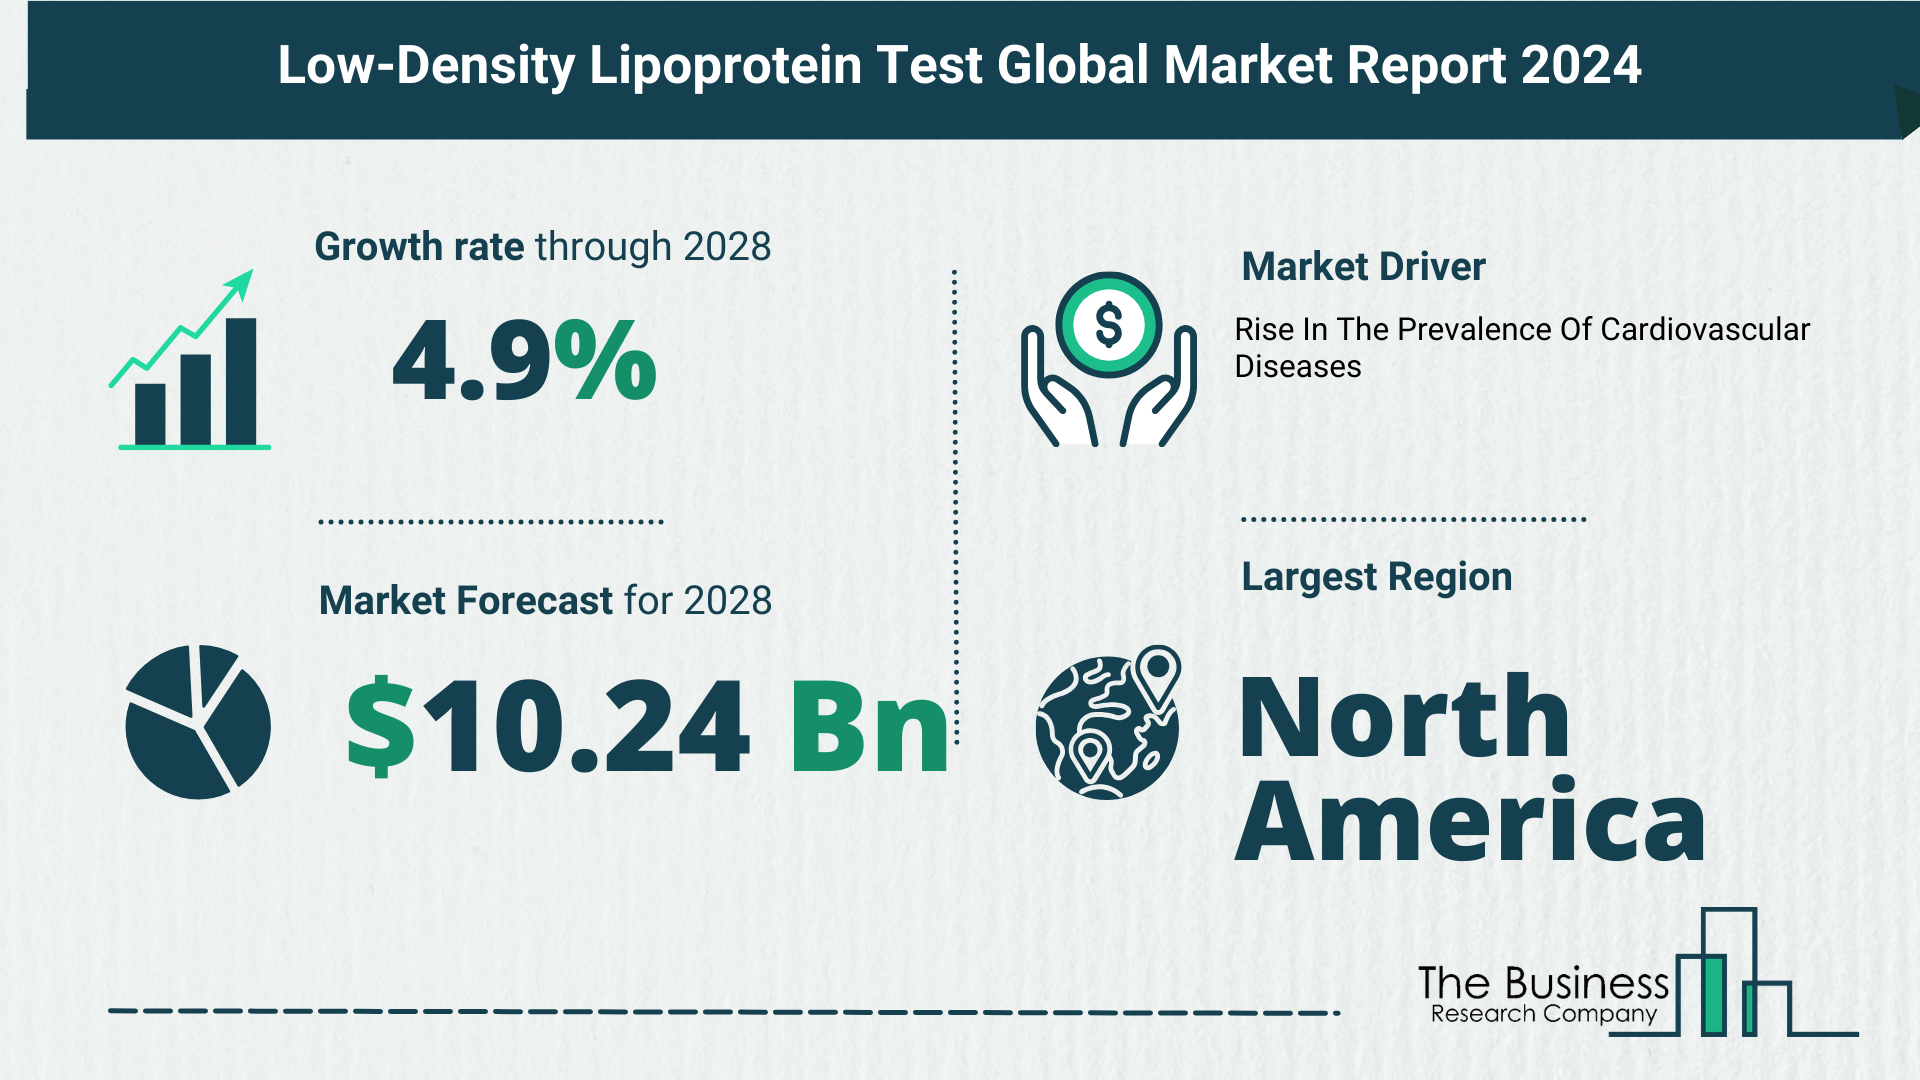 Global Low-Density Lipoprotein Test Market